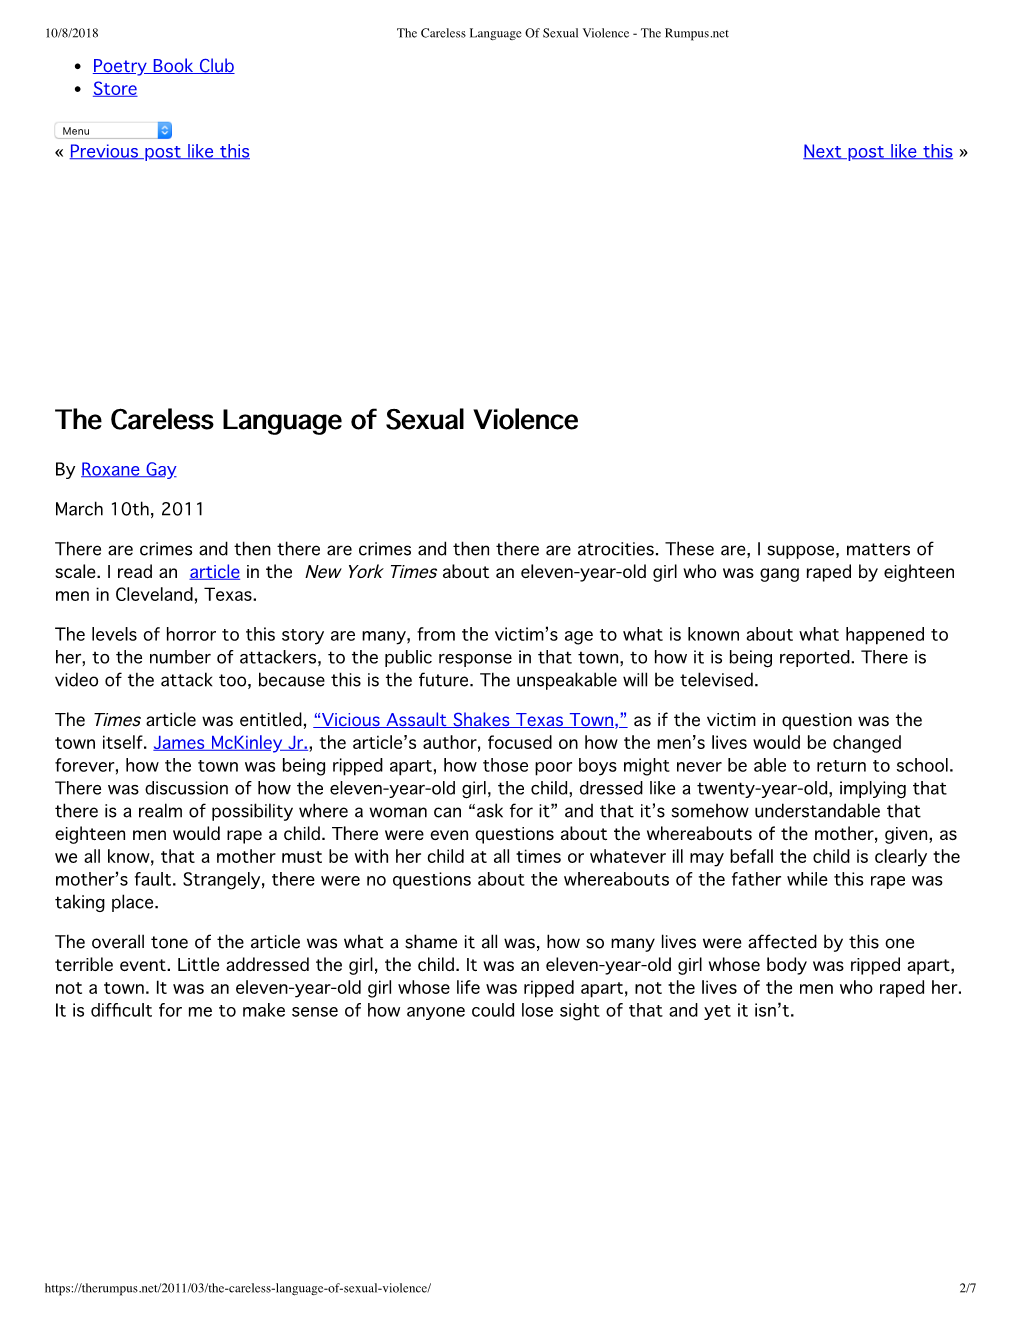 The Careless Language Of Sexual Violence The Rumpusnet Docslib 9135